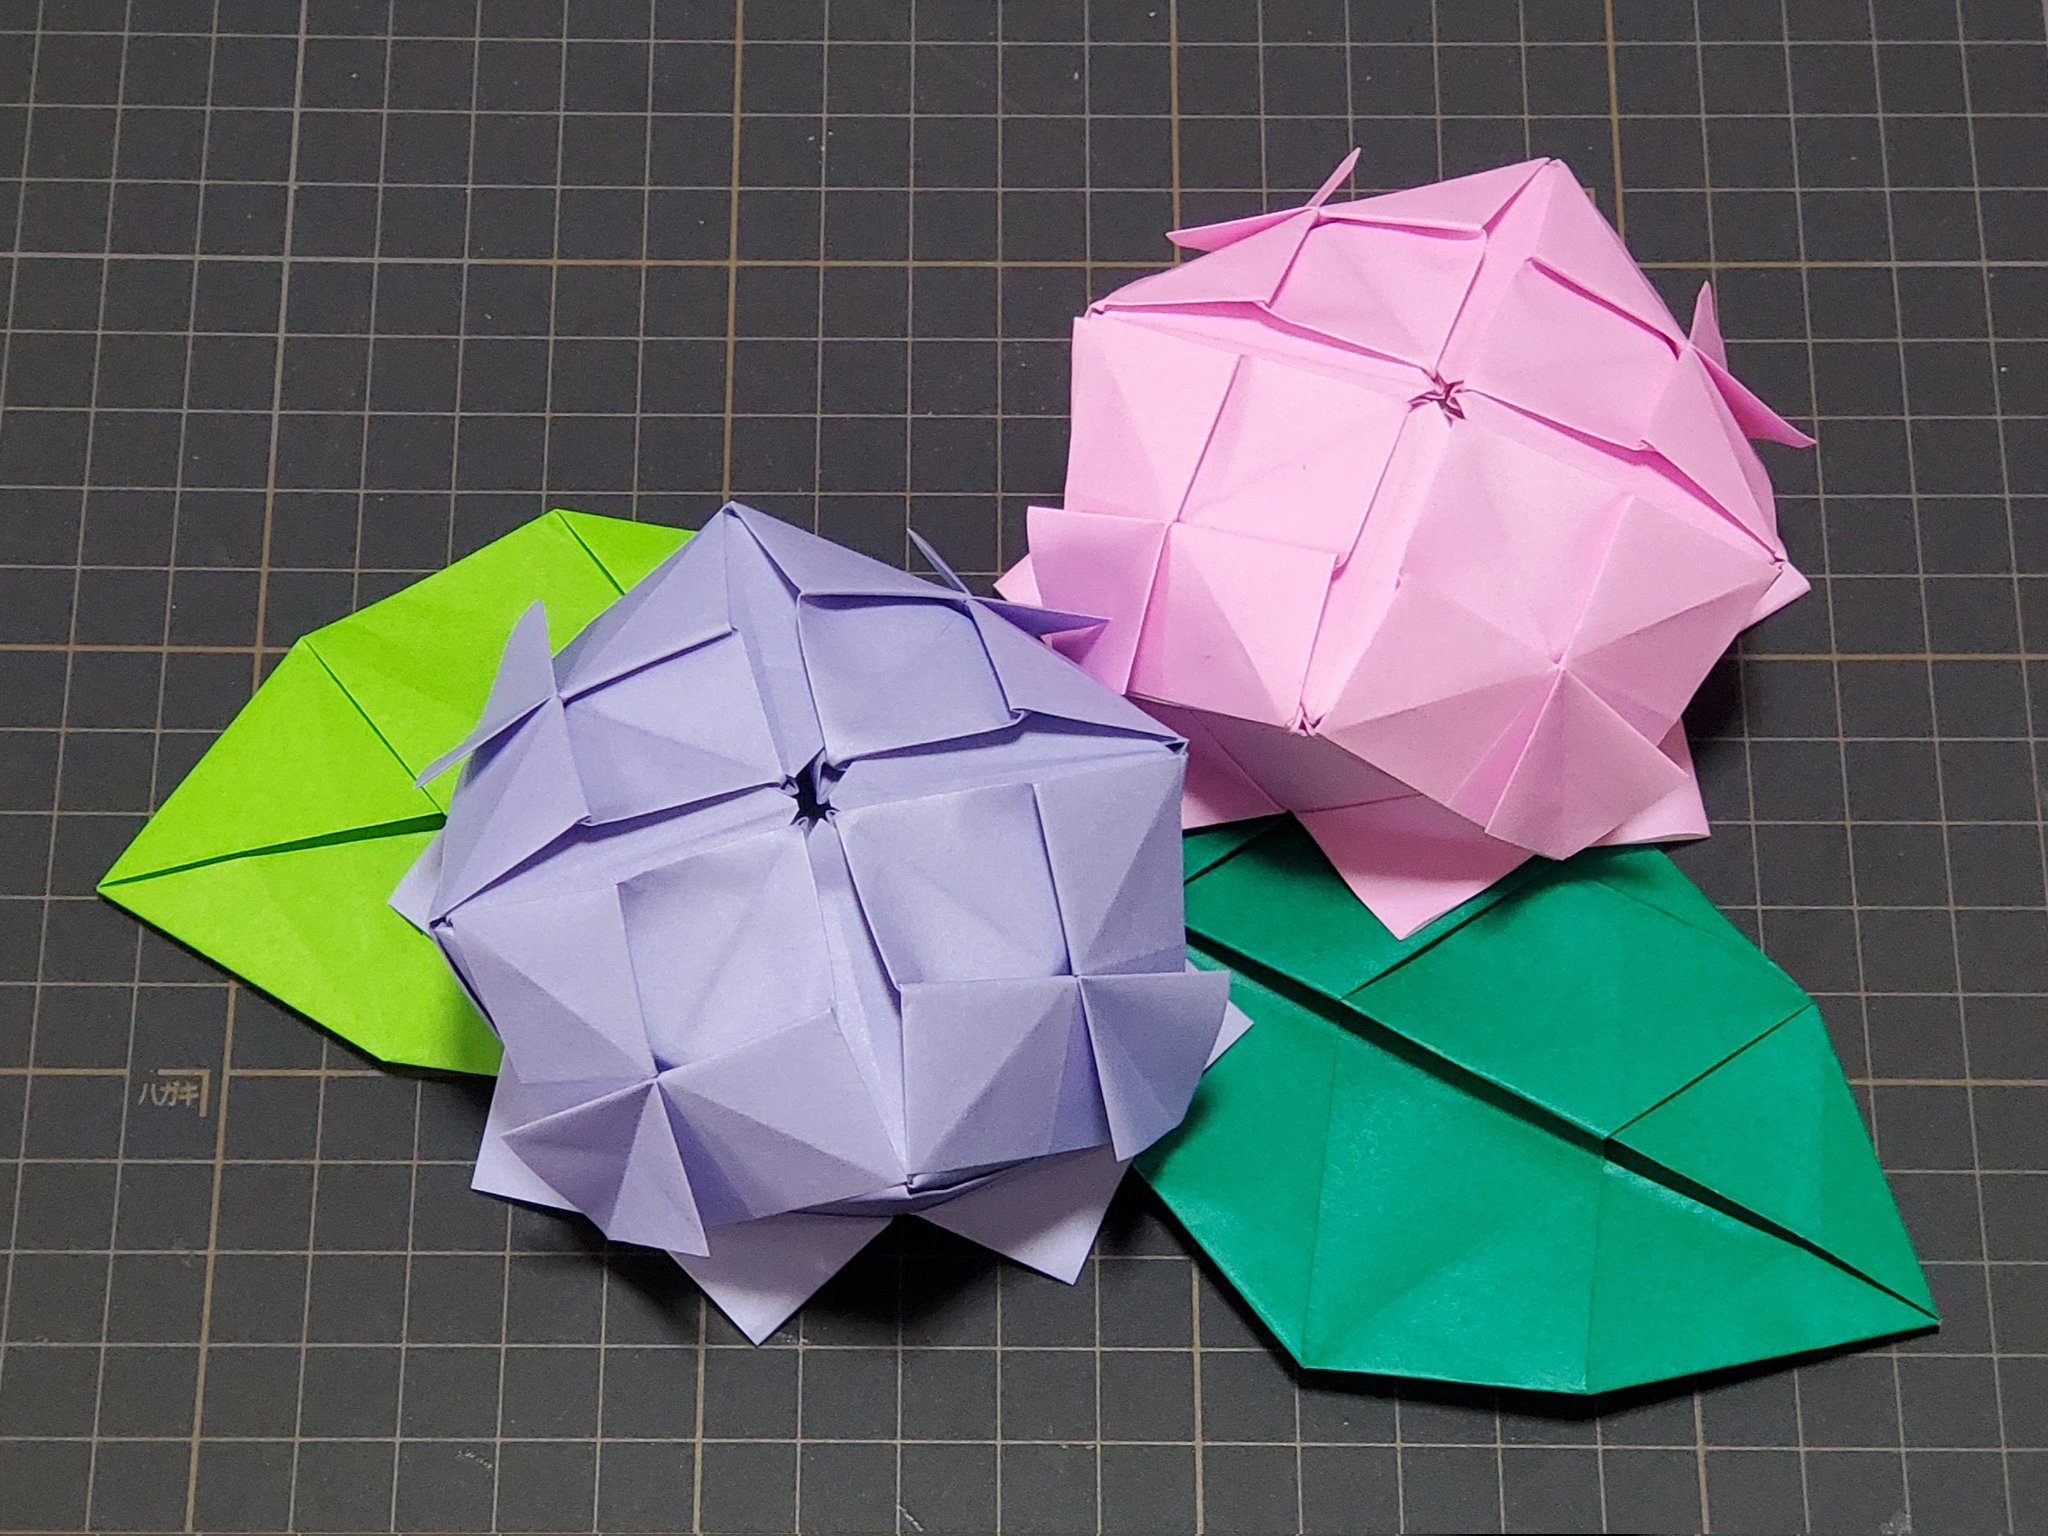 Tatsumi S Mitsuda 折り紙 紫陽花単体には同じサイズの折り紙一枚折りの葉っぱがジャストサイズ T Co E1gzt7imo1 Twitter